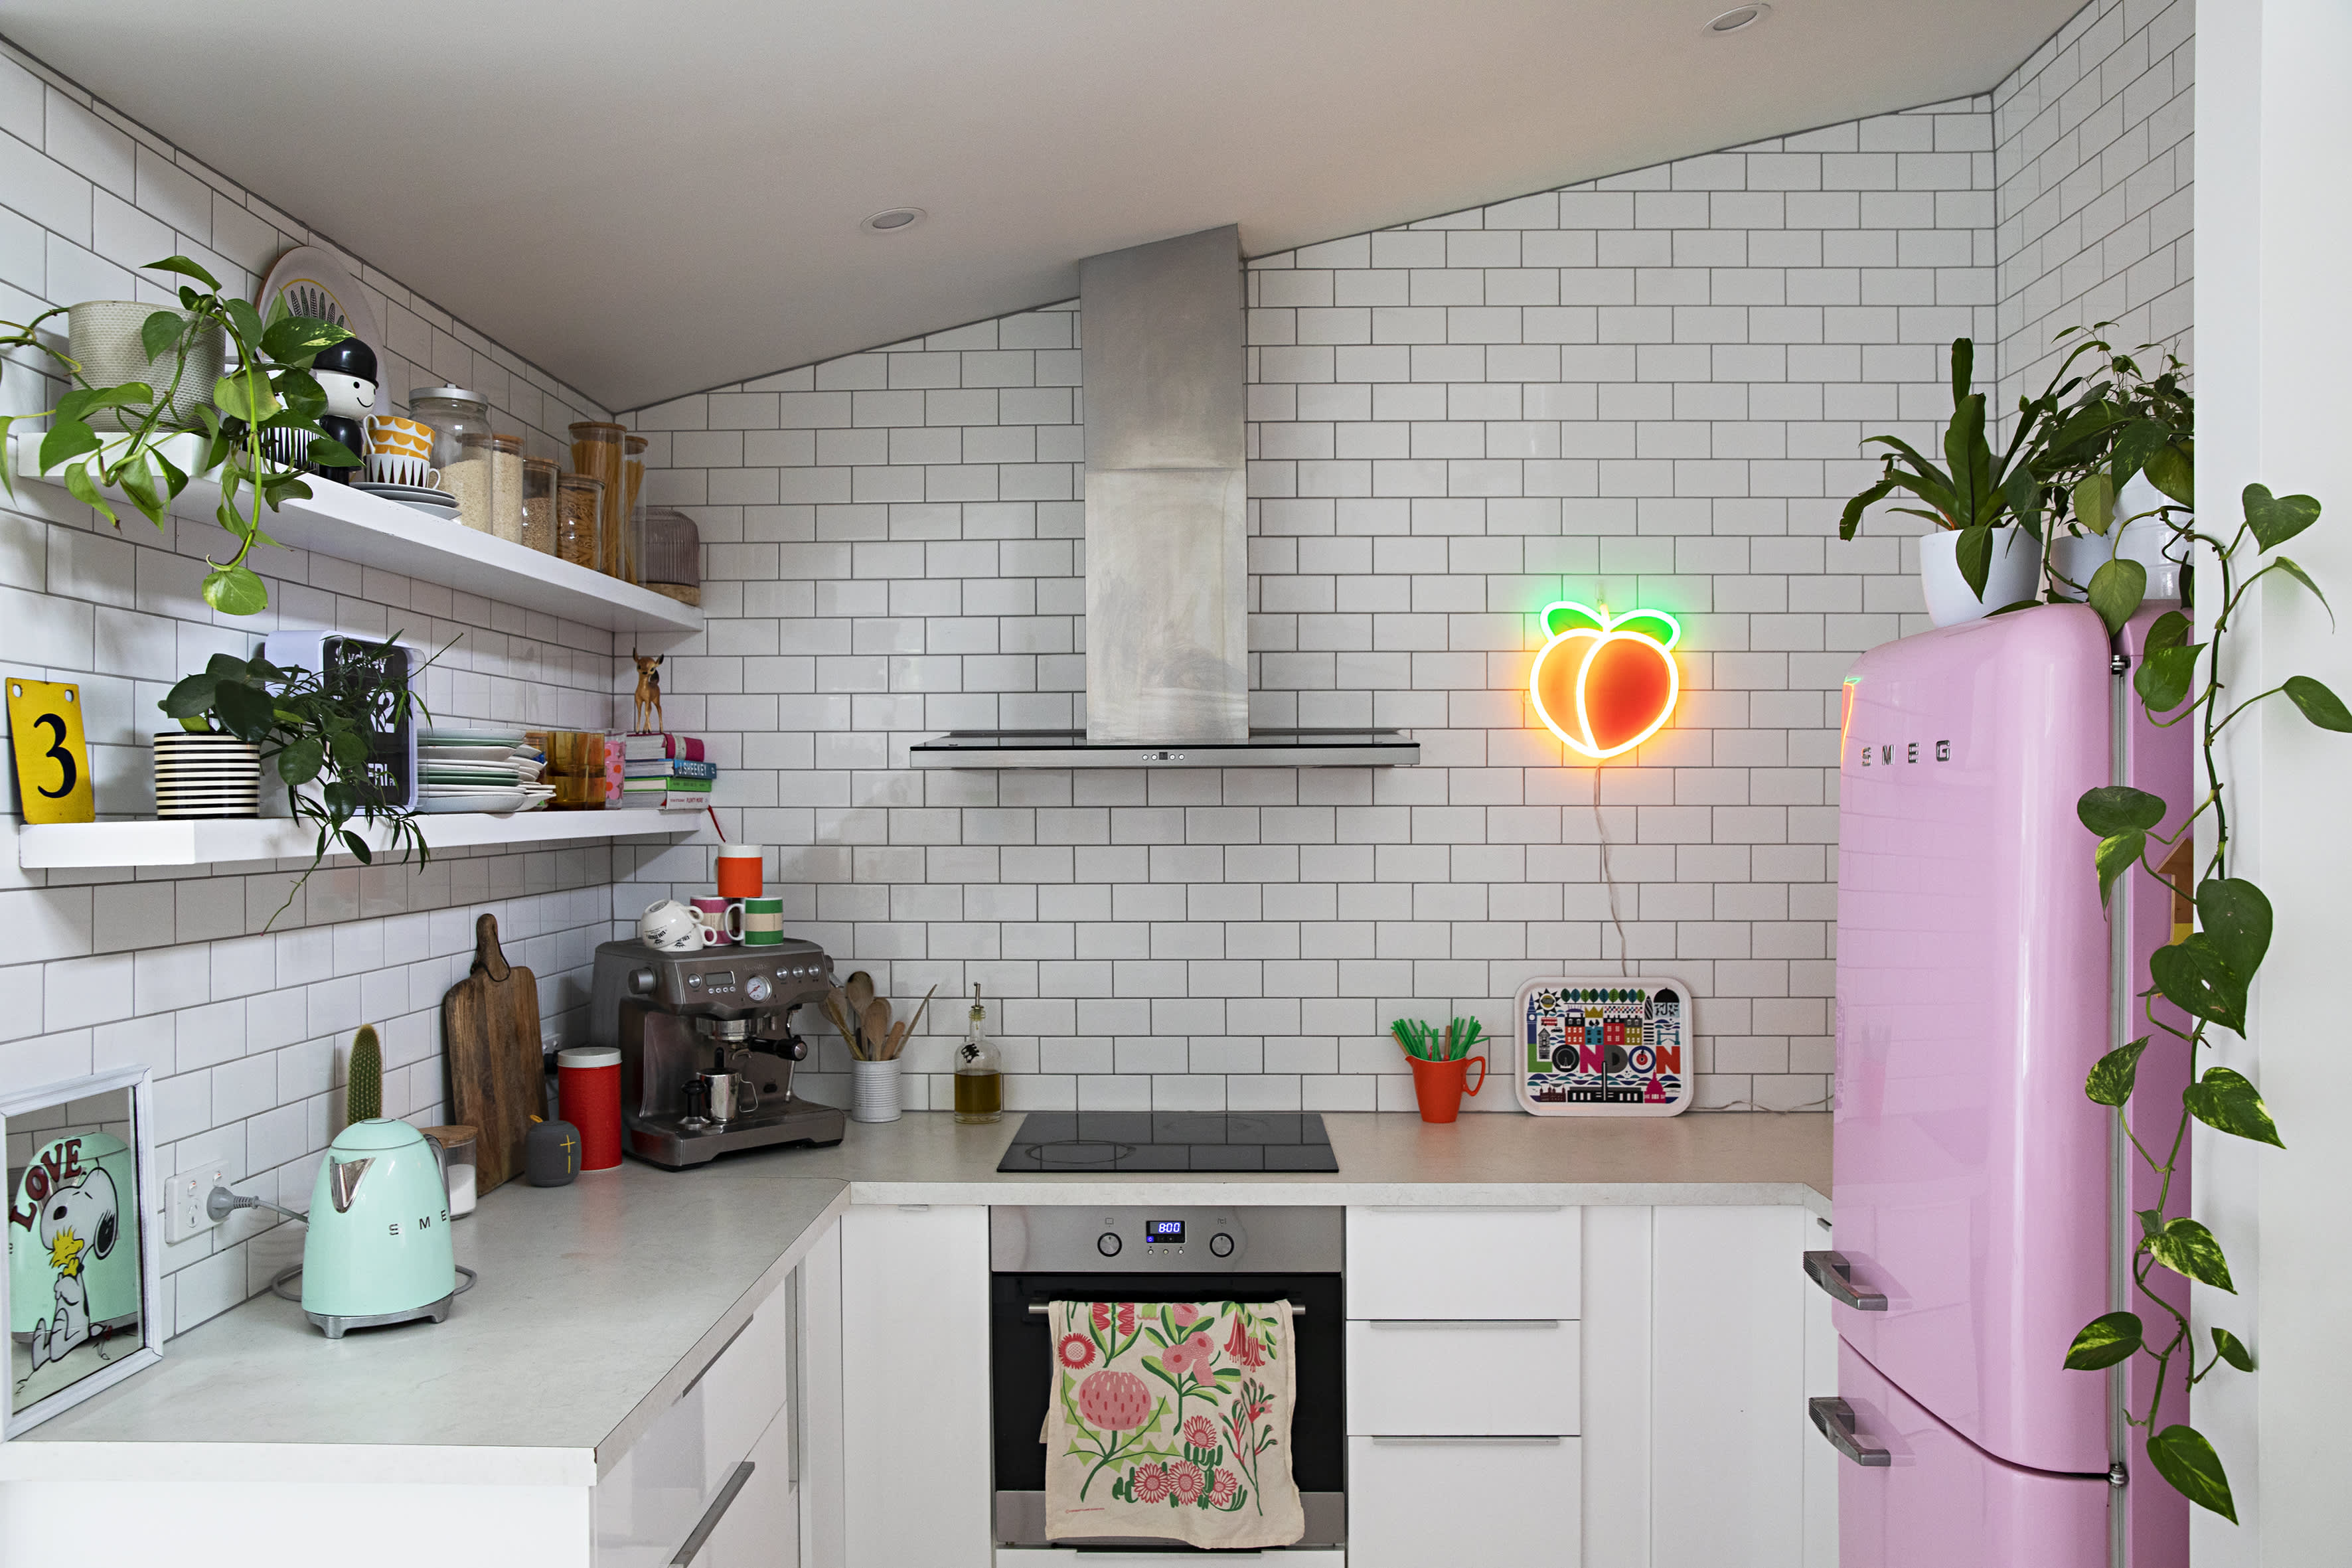  18 Cube Vintage Kitchen Ice Cube Tray: Home & Kitchen